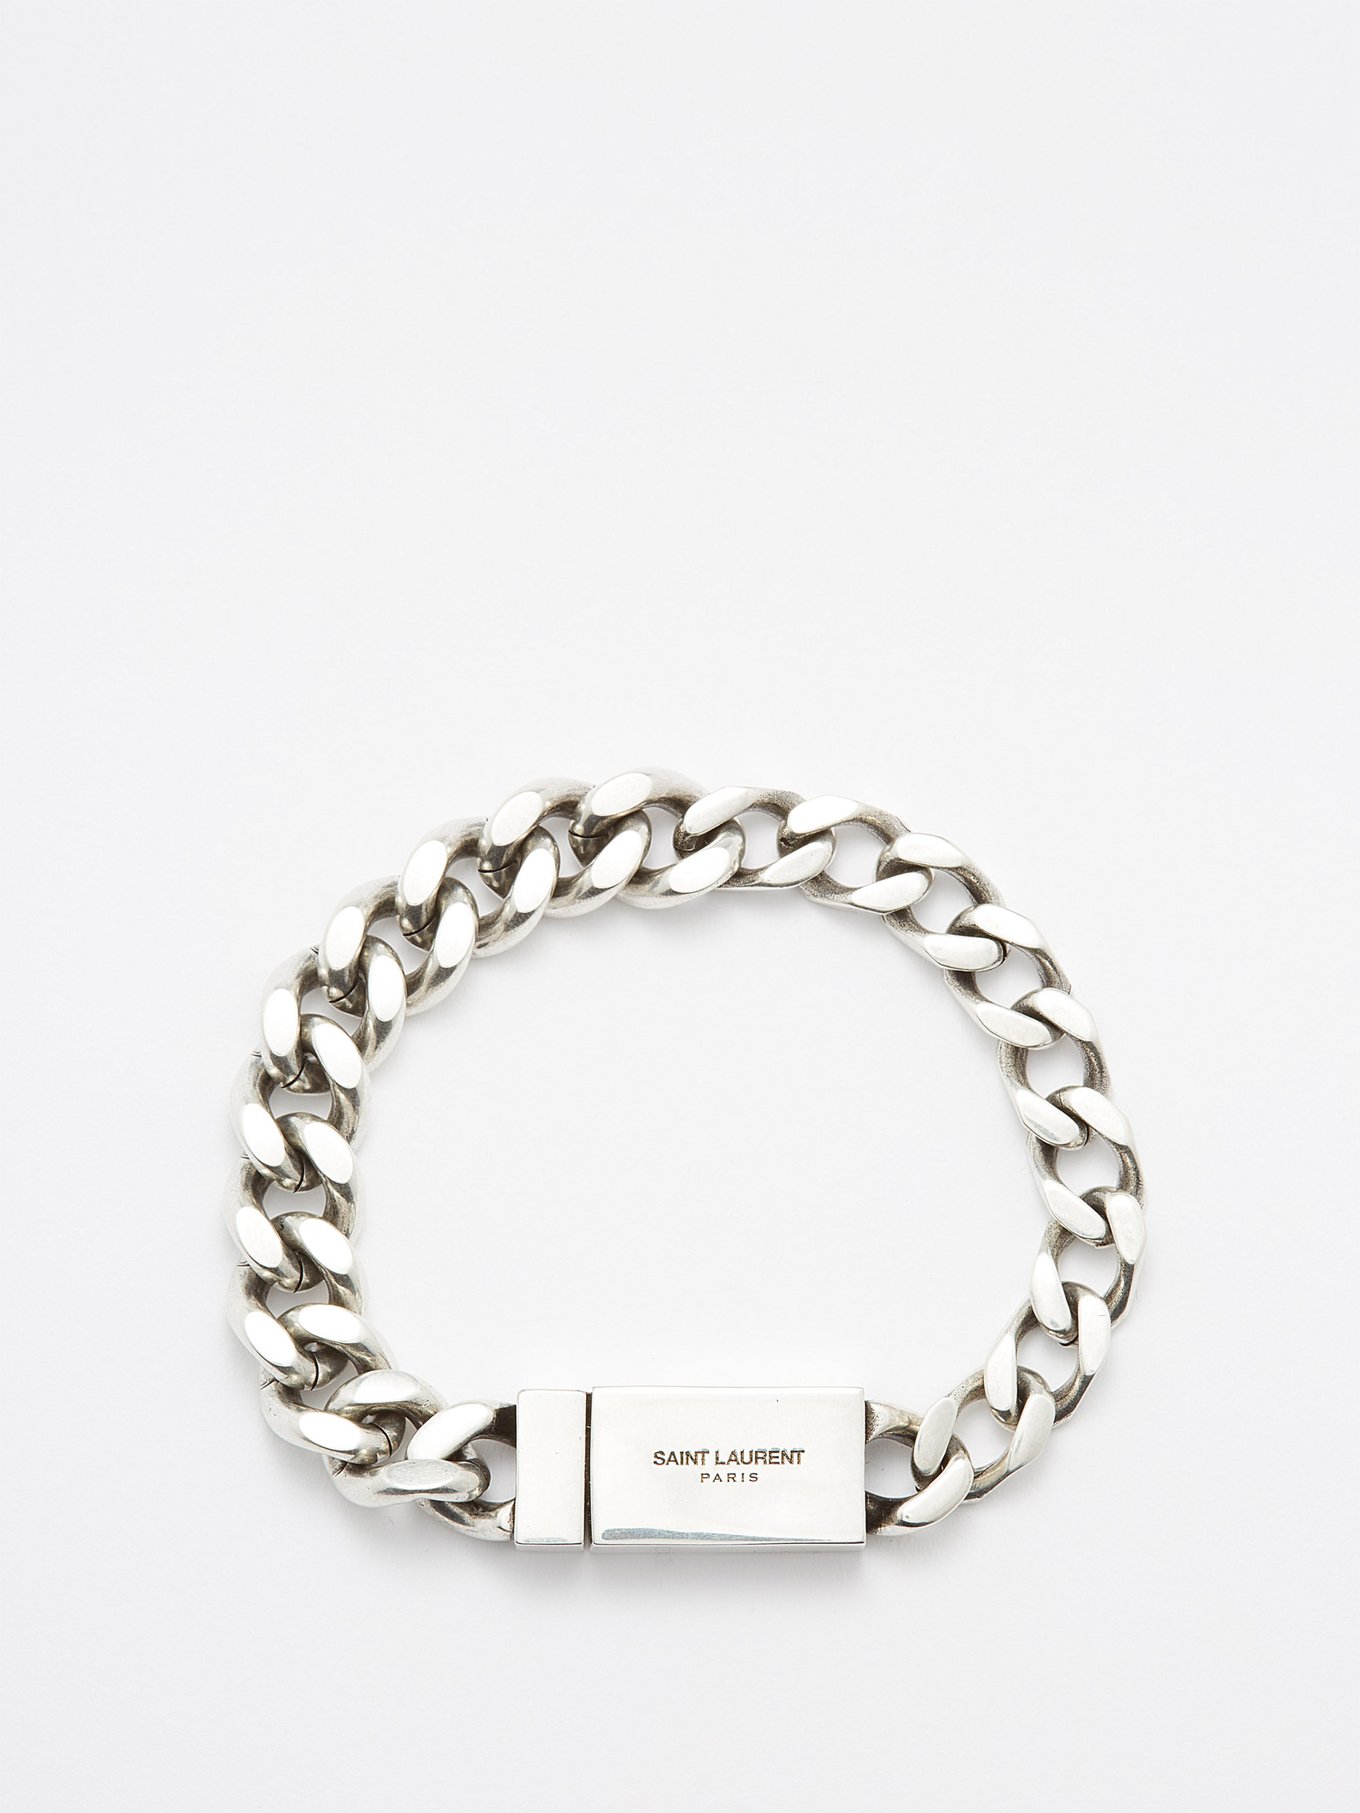 Yves Saint Laurent Monogram Bracelet (Gold/Curb Chain) - Medium